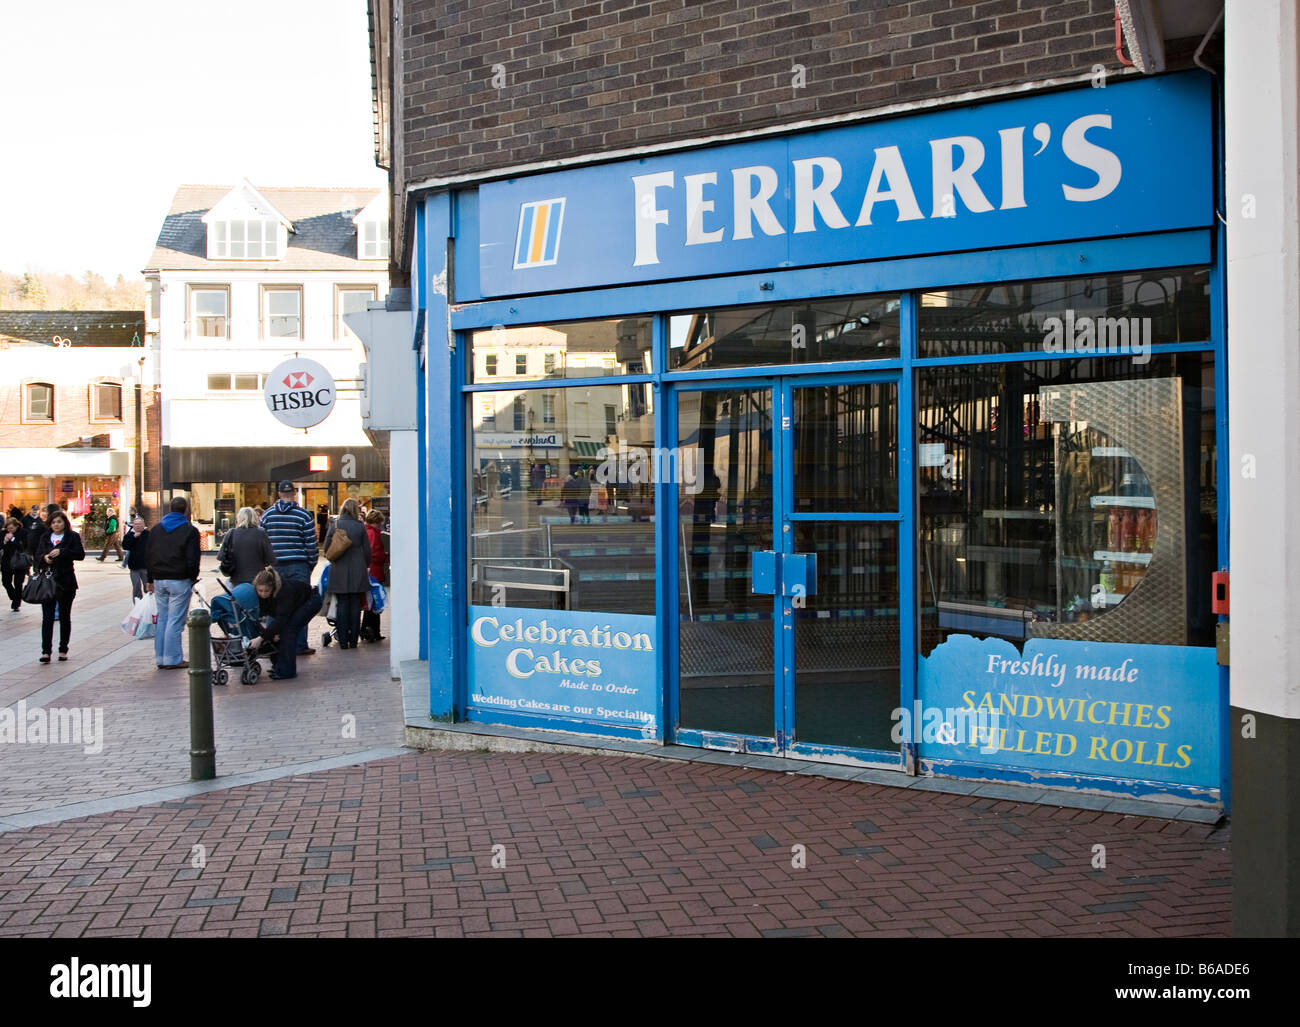 Ferrari's bakers shop closed during recession Merthyr Tydfil Wales UK Stock Photo